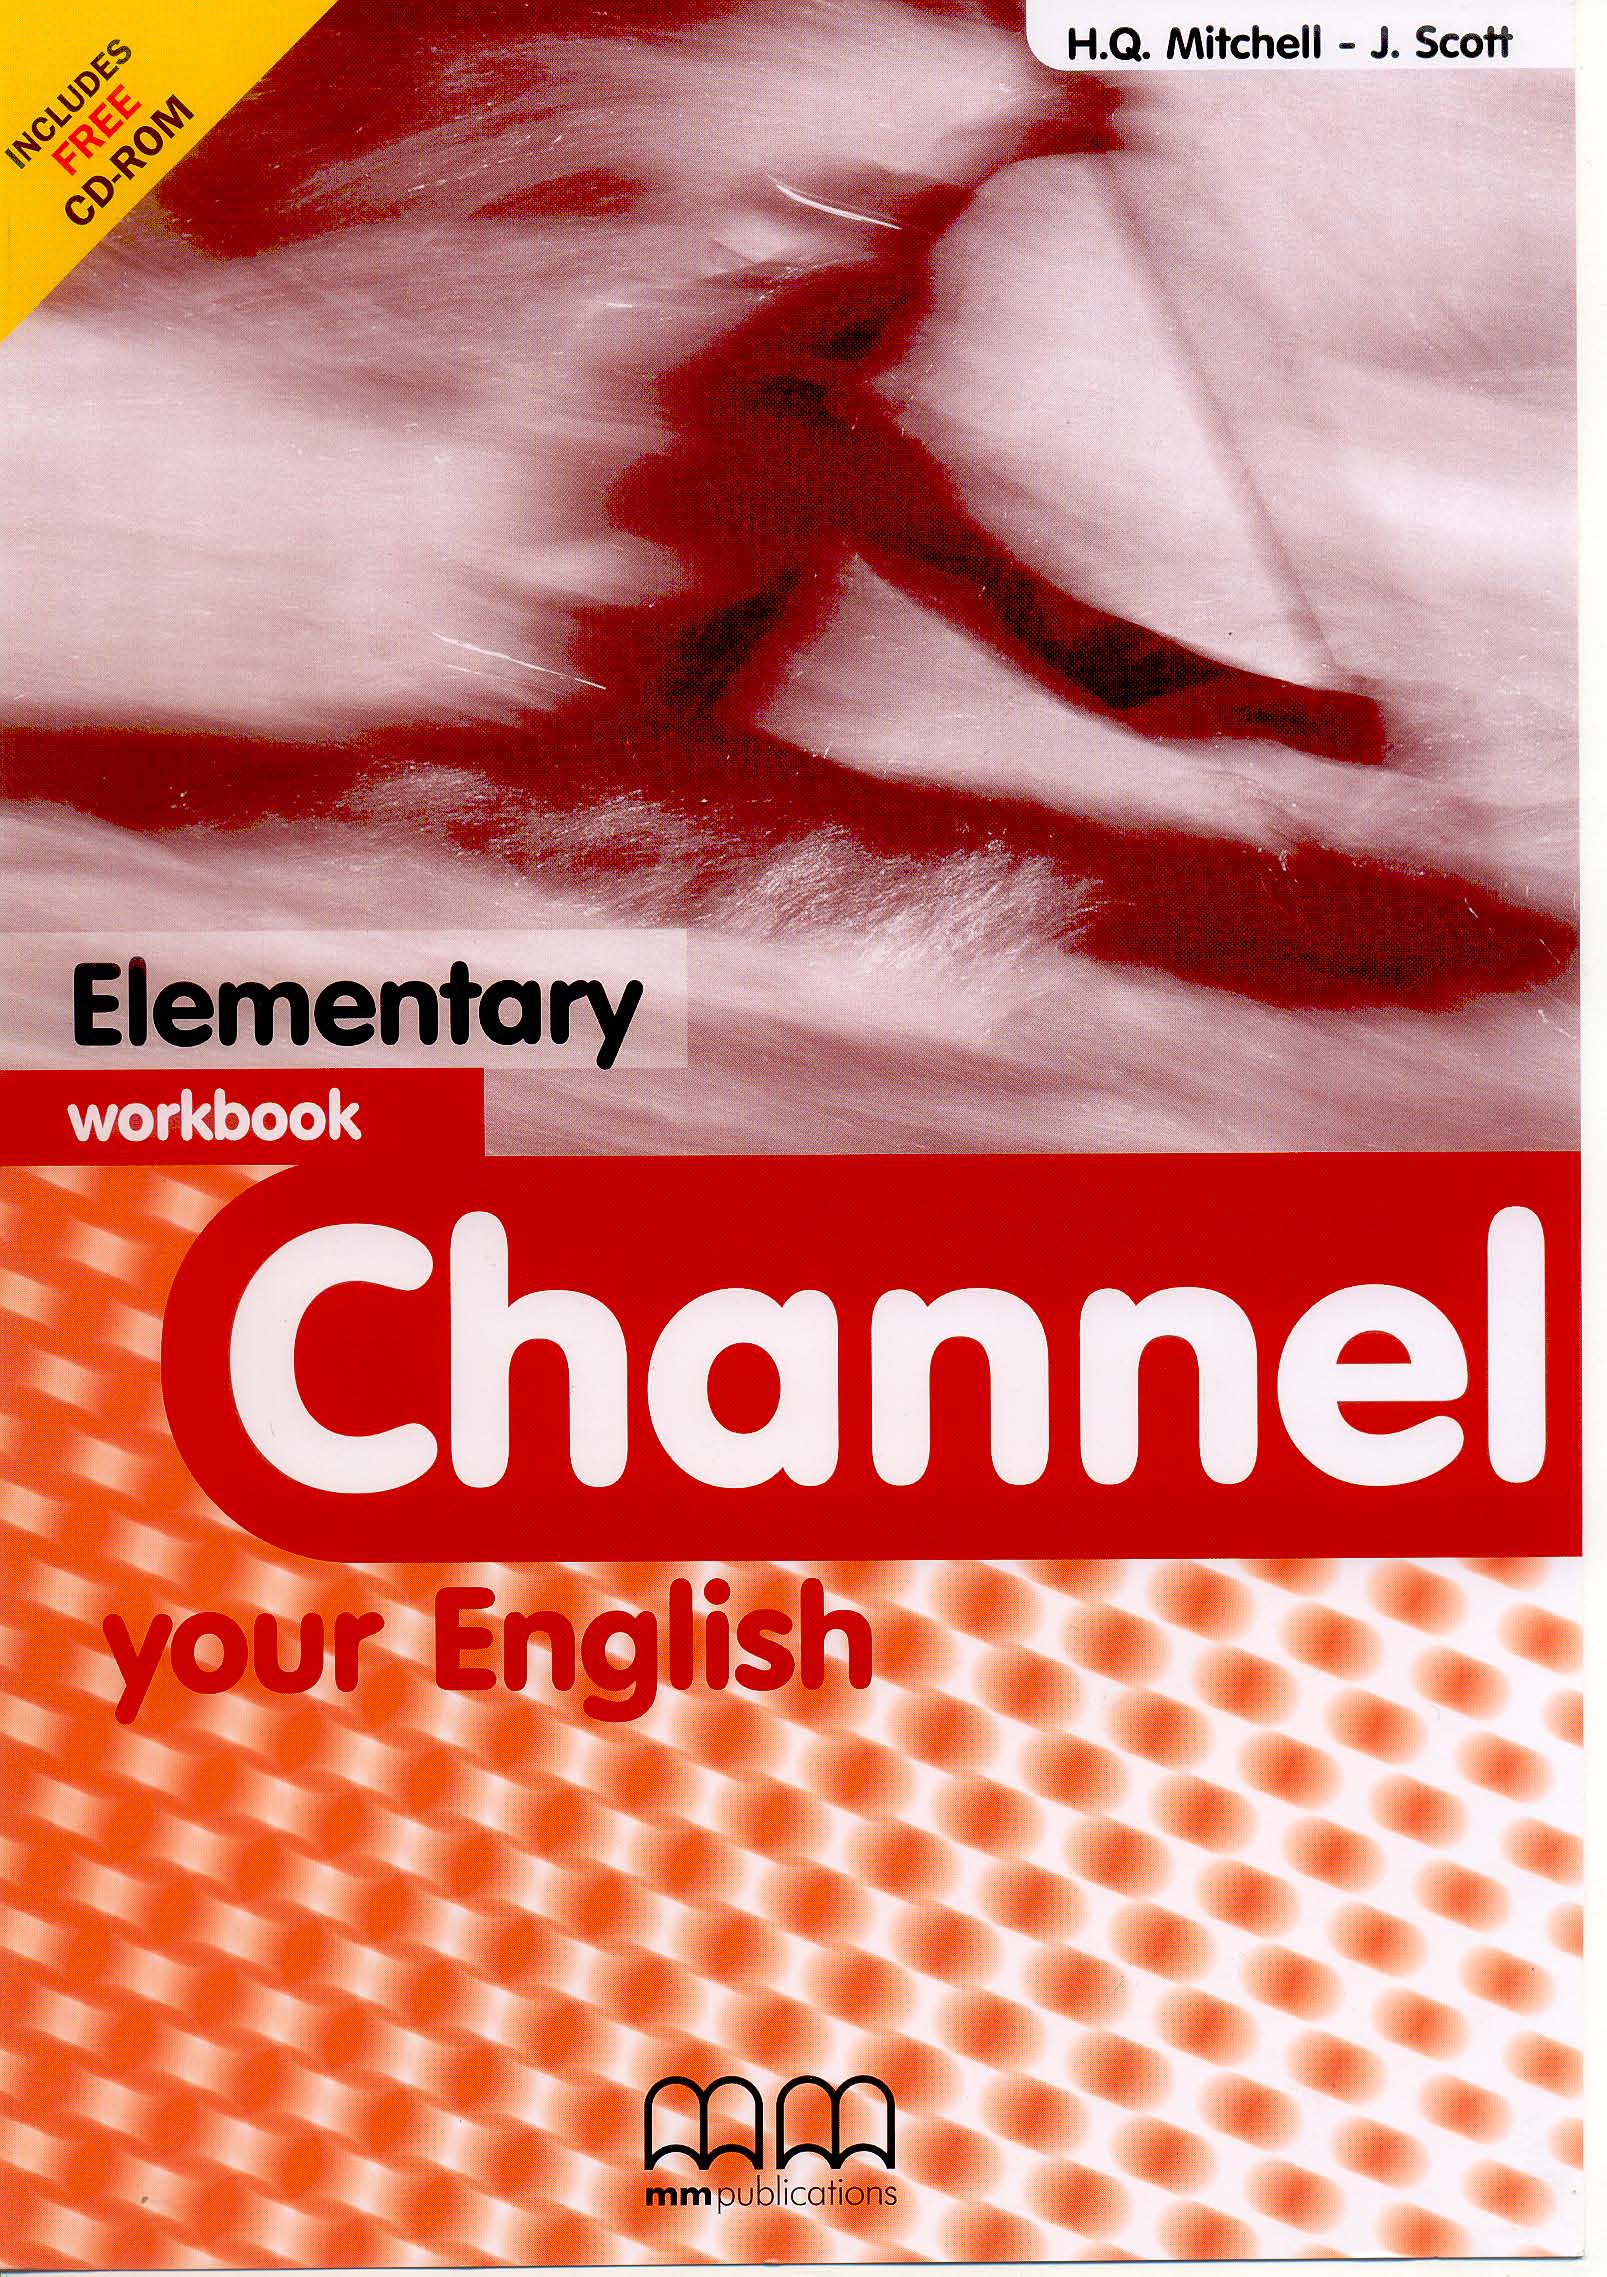 Elementary english video. Английский Elementary. Книги English Elementary. Элементари книга на английском. English Elementary Workbook.